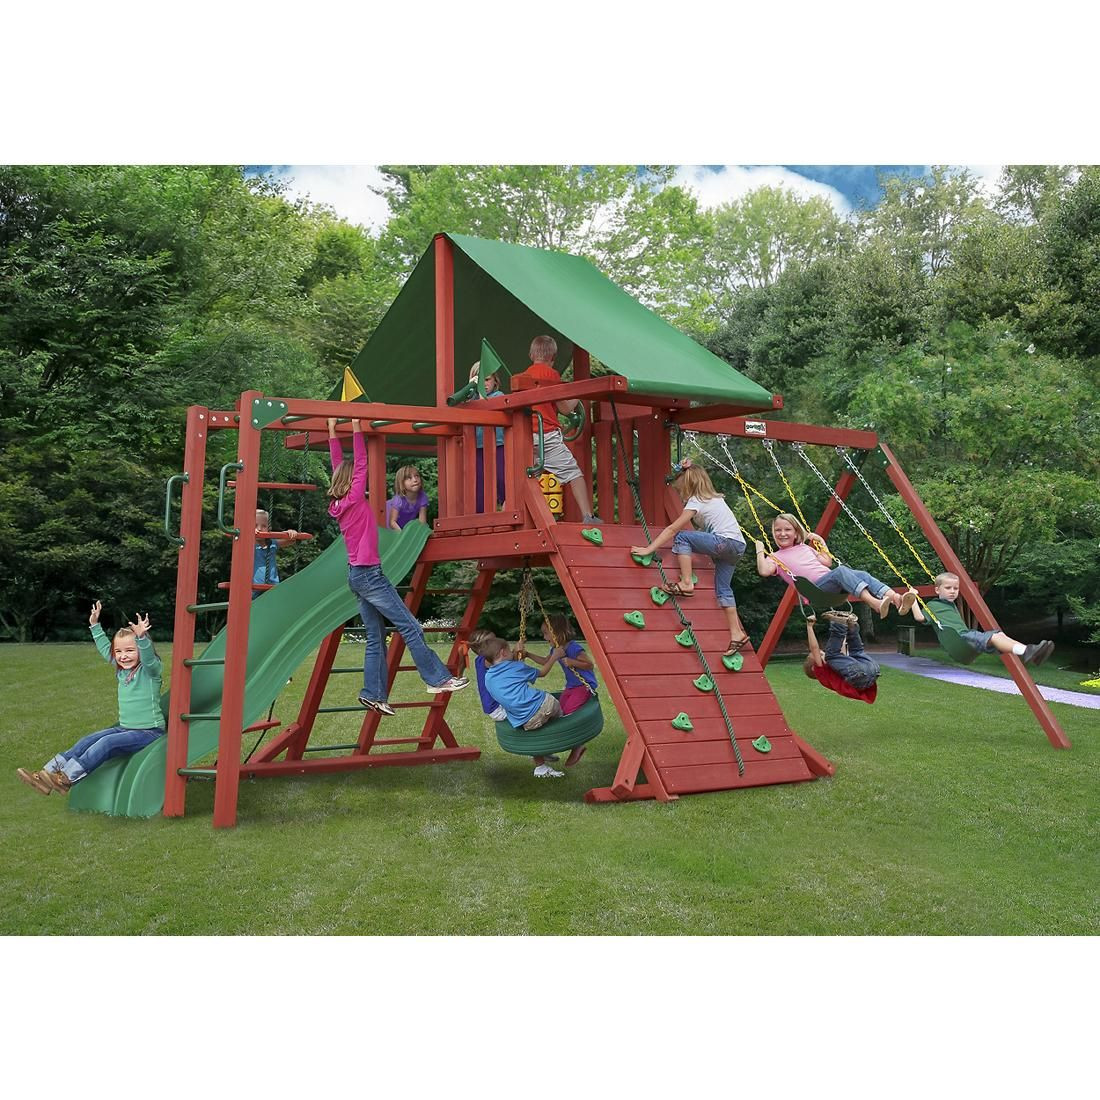 Kids Swing Sets For Sale
 Gorilla Playsets Rockwood Wooden Cedar Swing Set with